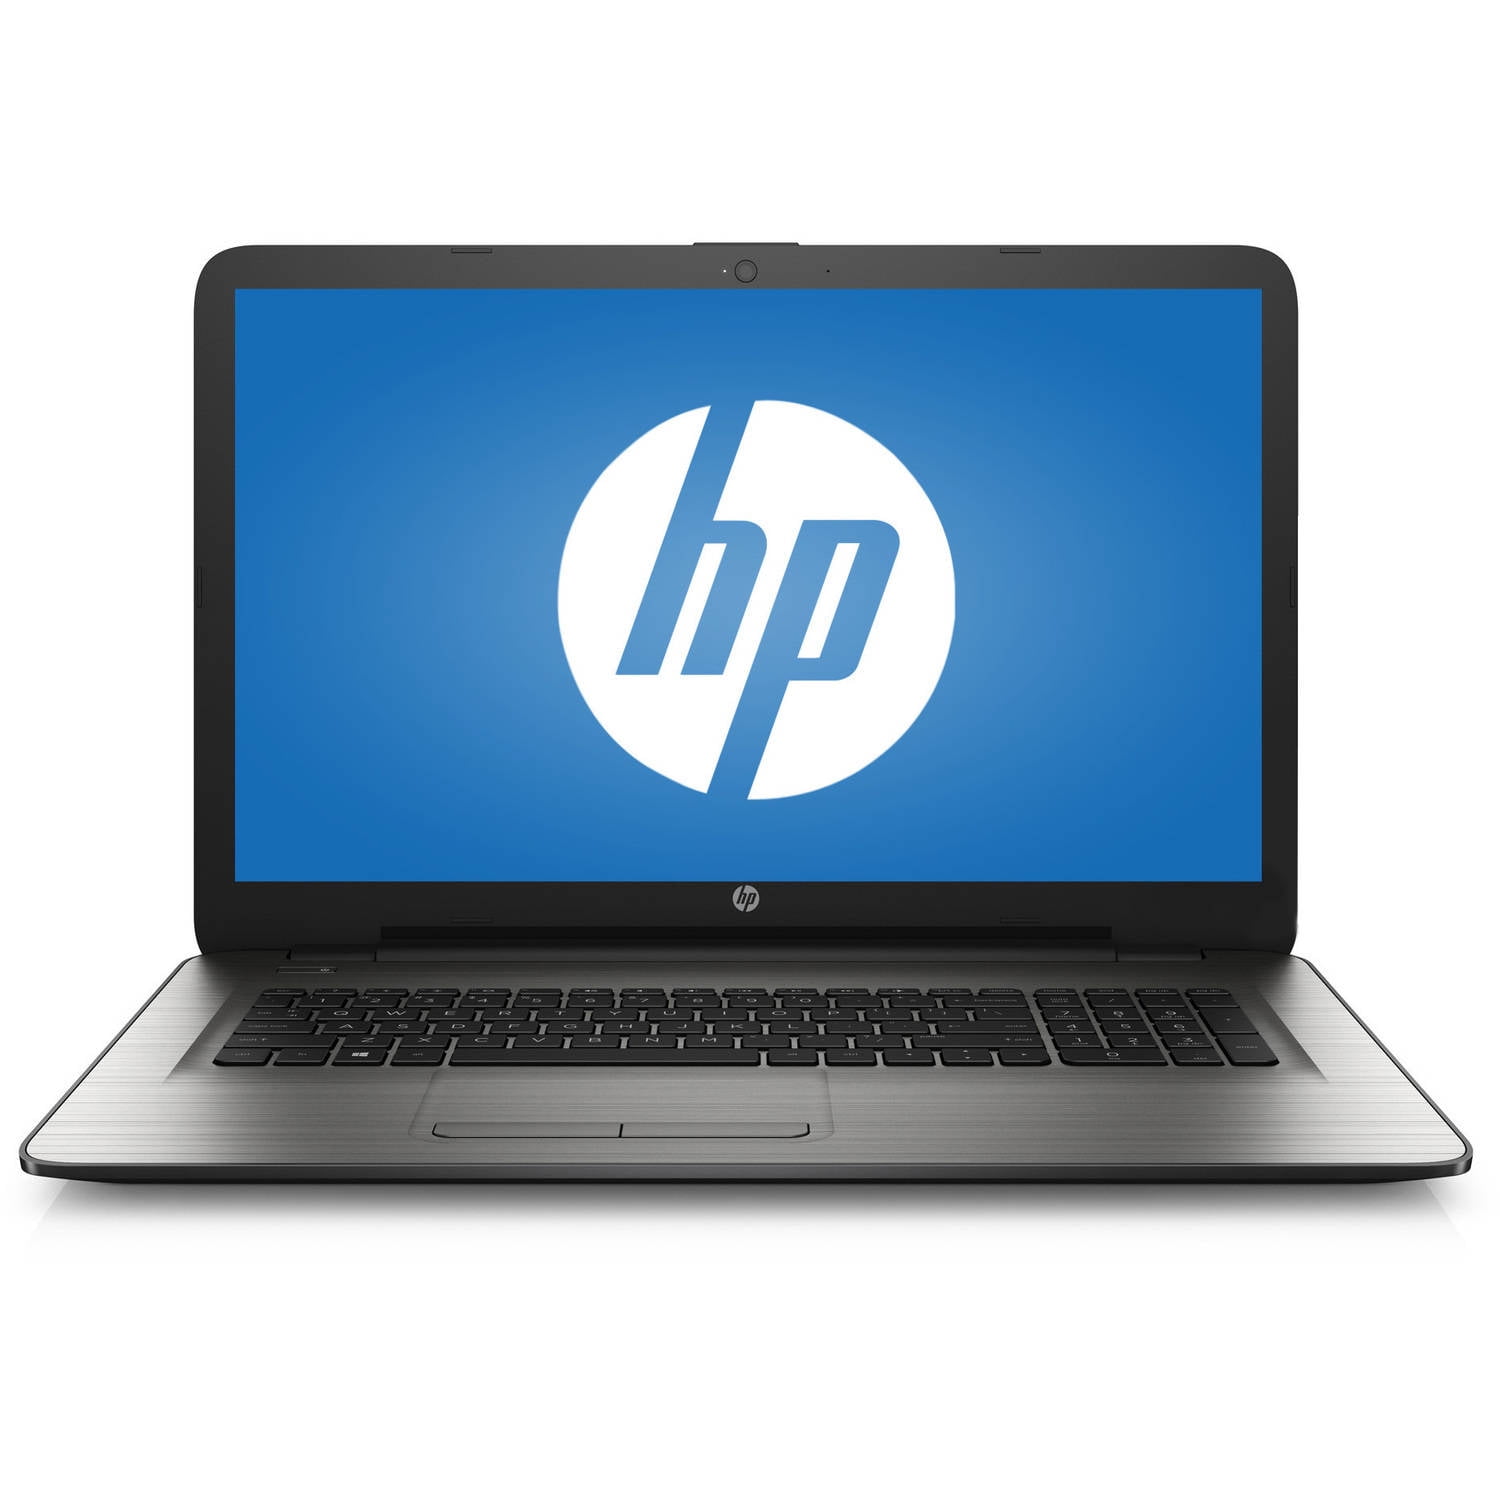 HP 17 x020nr 17.3" Laptop, touch screen, Windows 10 Home, Intel Core i3 5005U Processor, 8GB RAM, 1TB Hard Drive